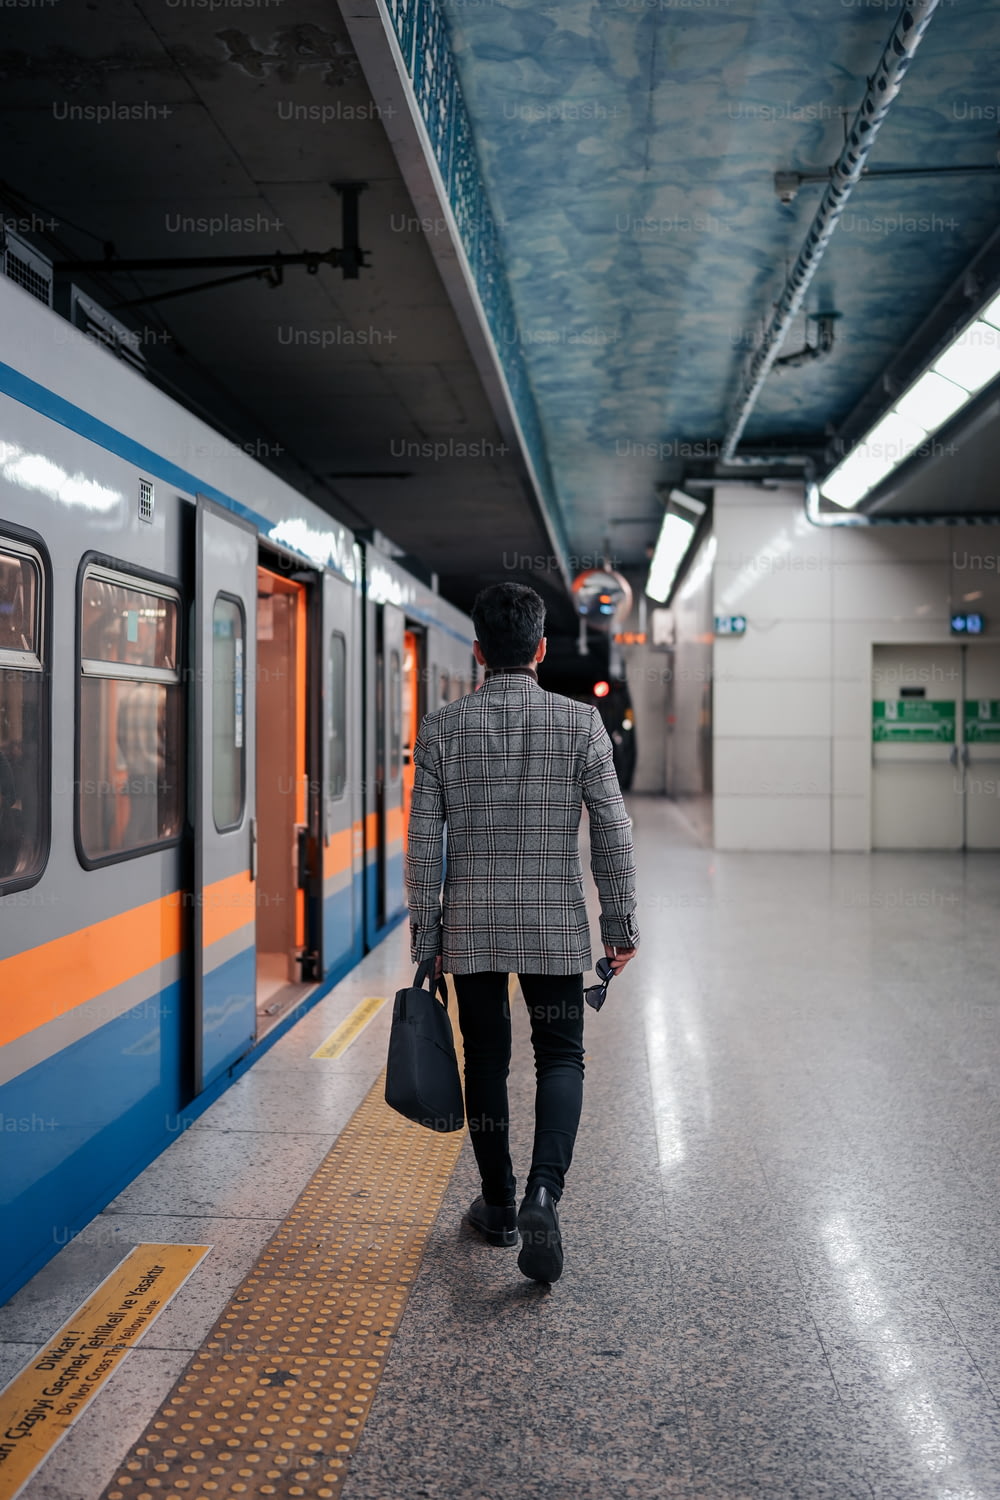 a man walking down a subway platform carrying a bag